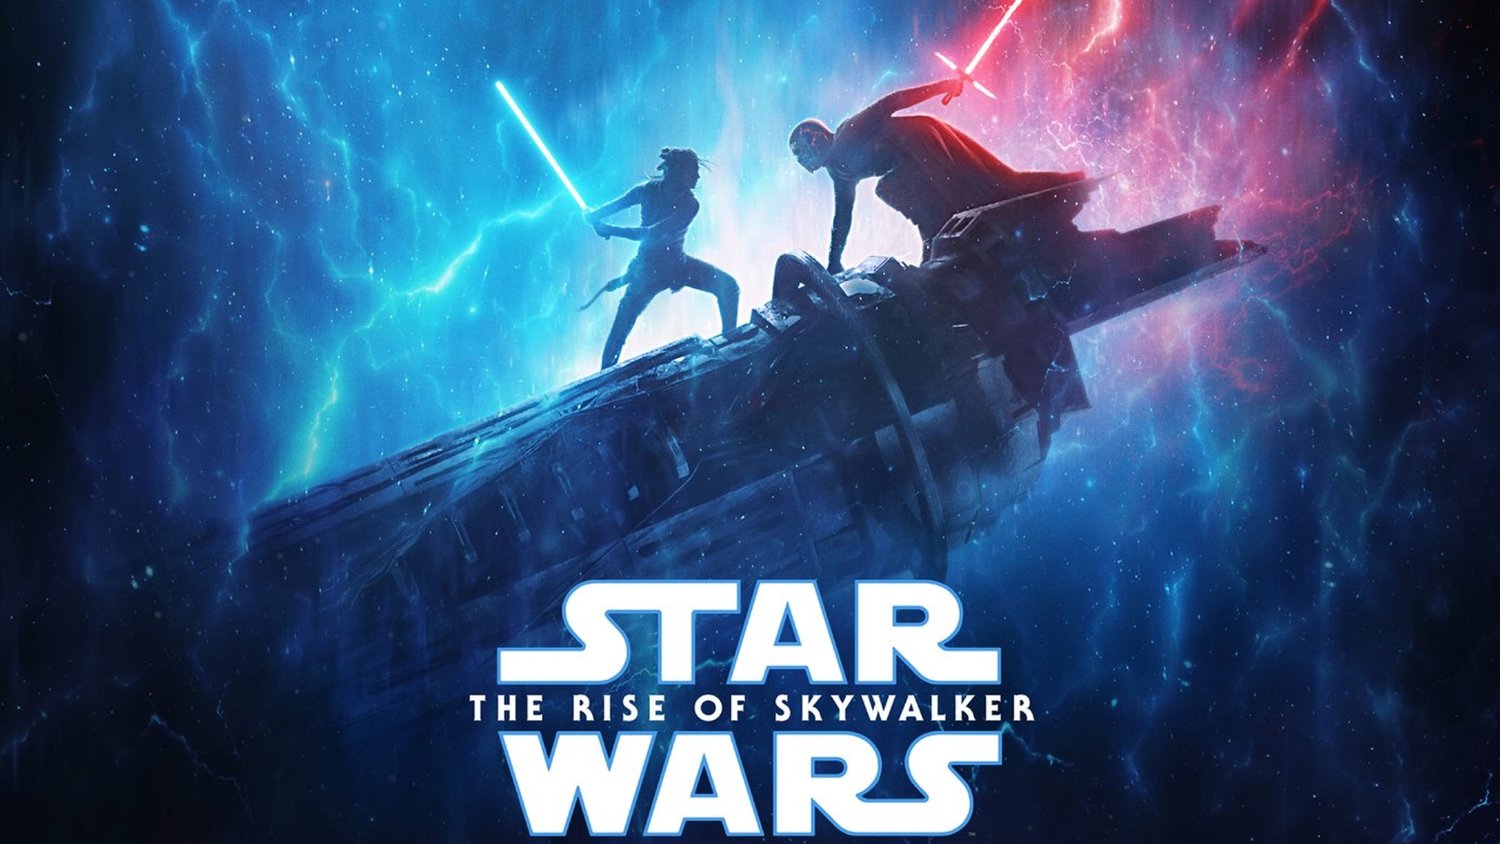 Personas con epilepsia fotosensible deben ver la película «Star Wars: The Rise of Skywalker» acomopañadas afirma Disney